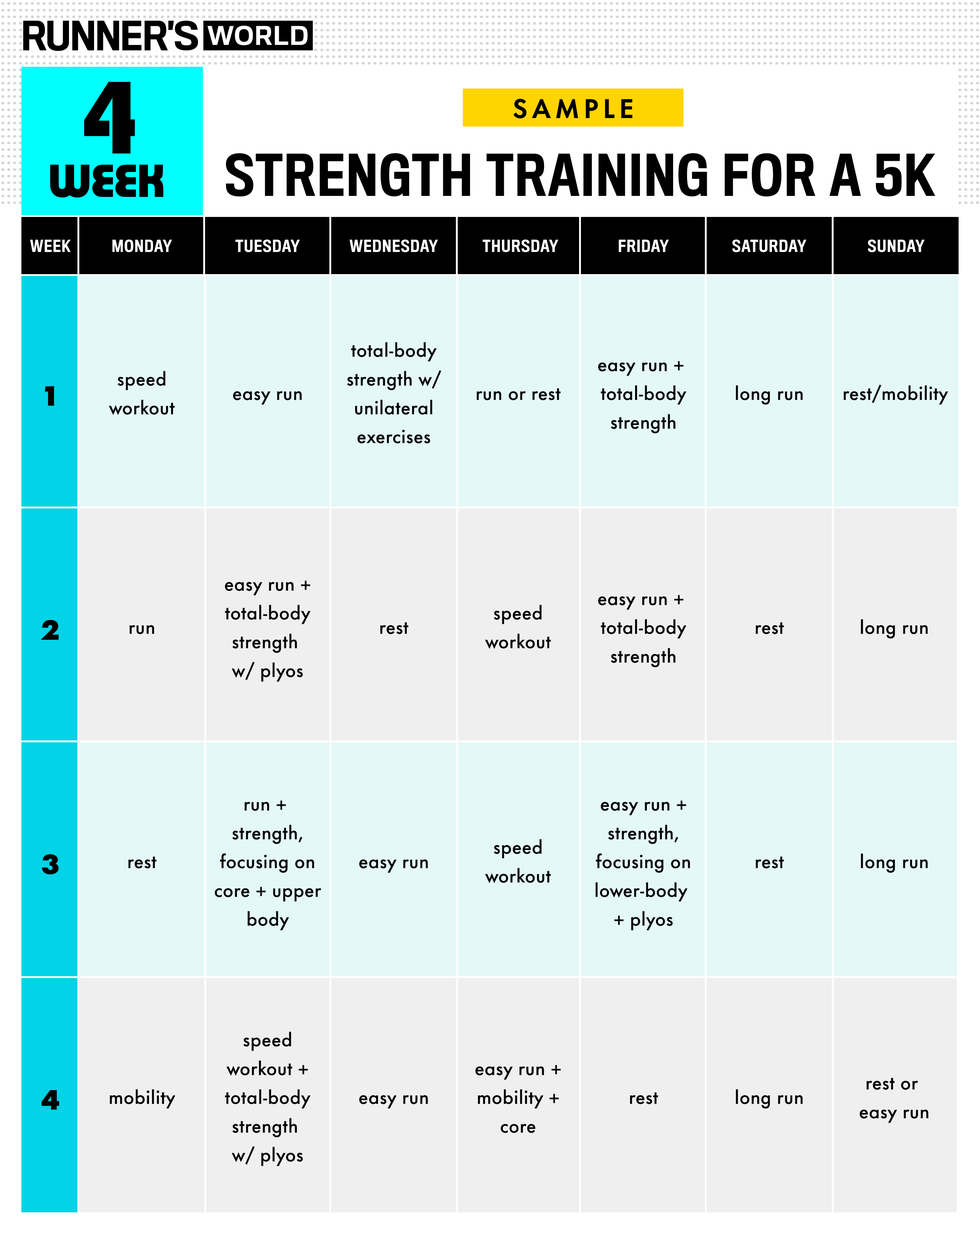 strength training for a 5k